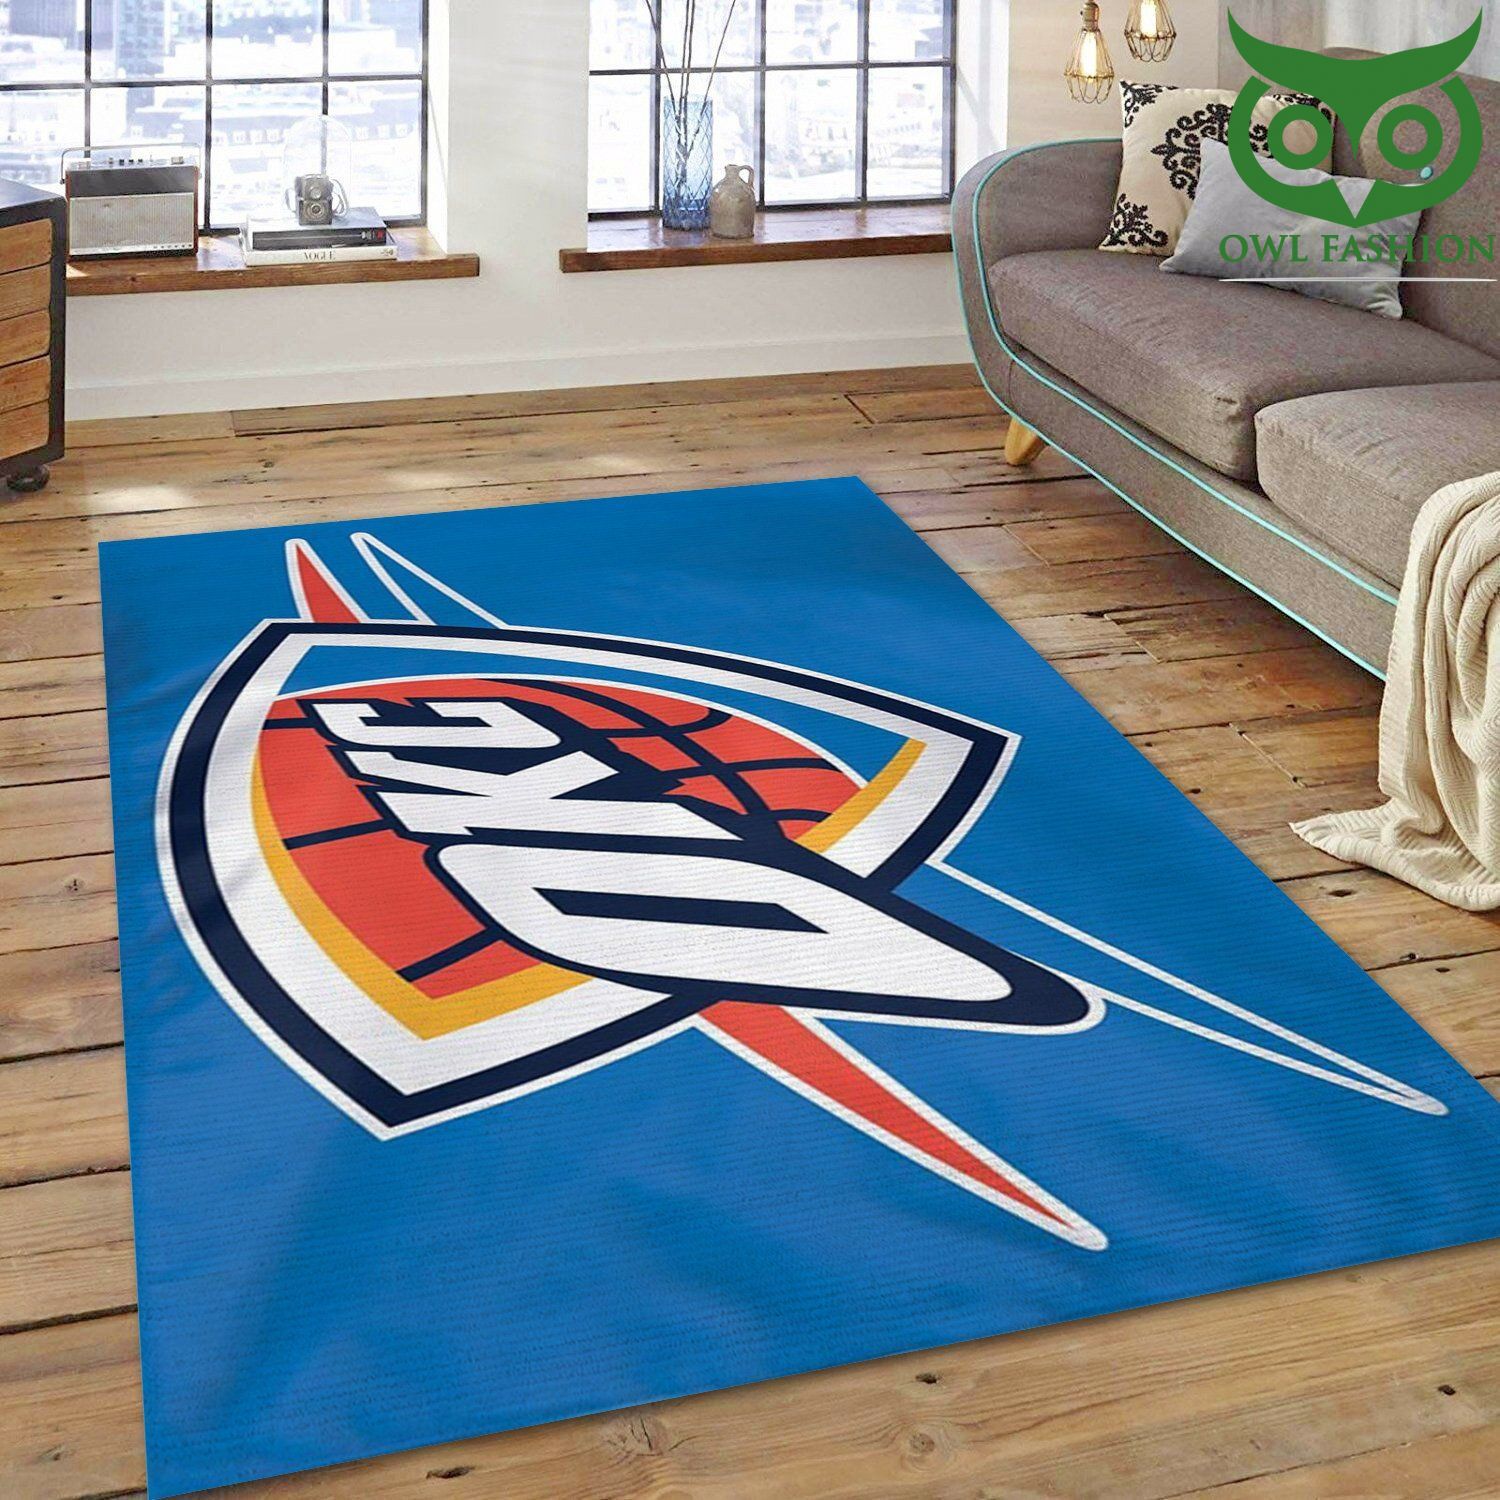 Oklahoma City Thunder Wincraft Area NBA carpet rug home decor